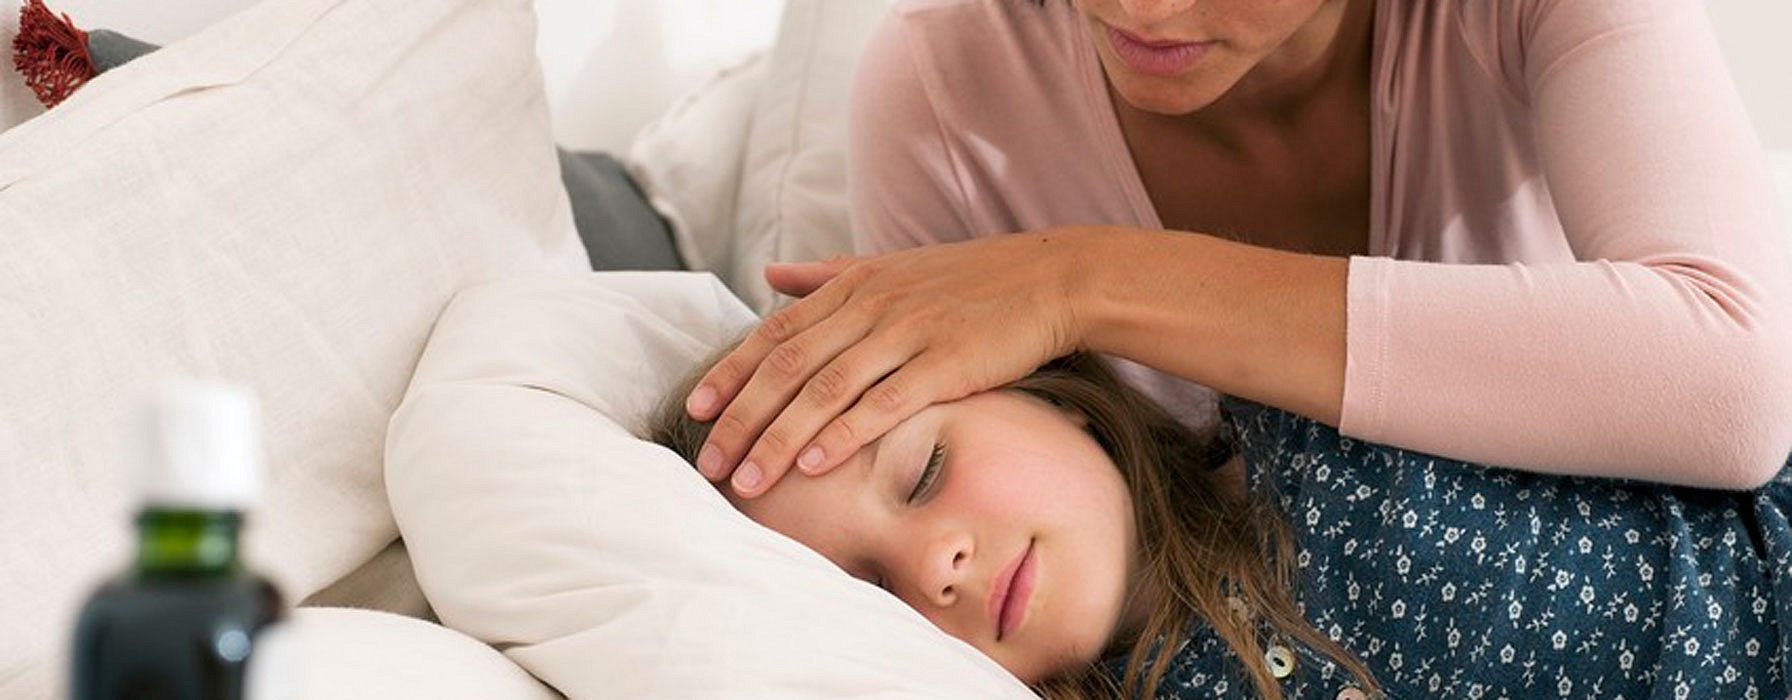 Frau umsorgt krankes Kind im Bett